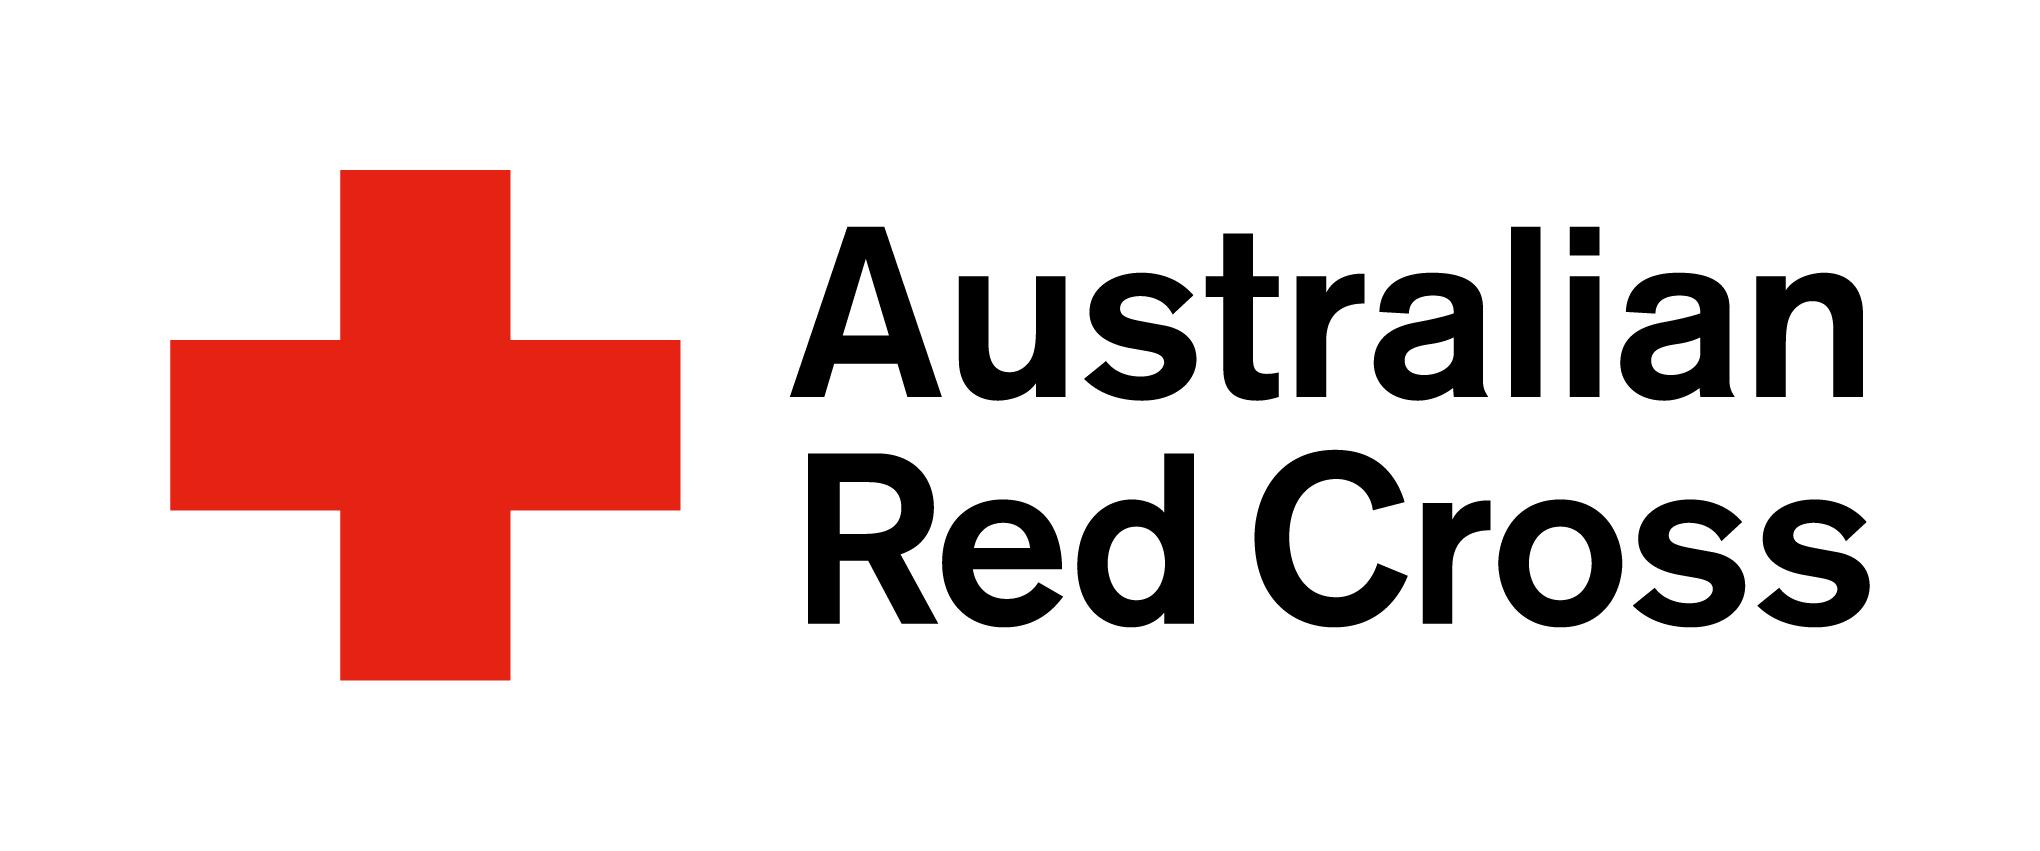 Charity – The Australian Red Cross